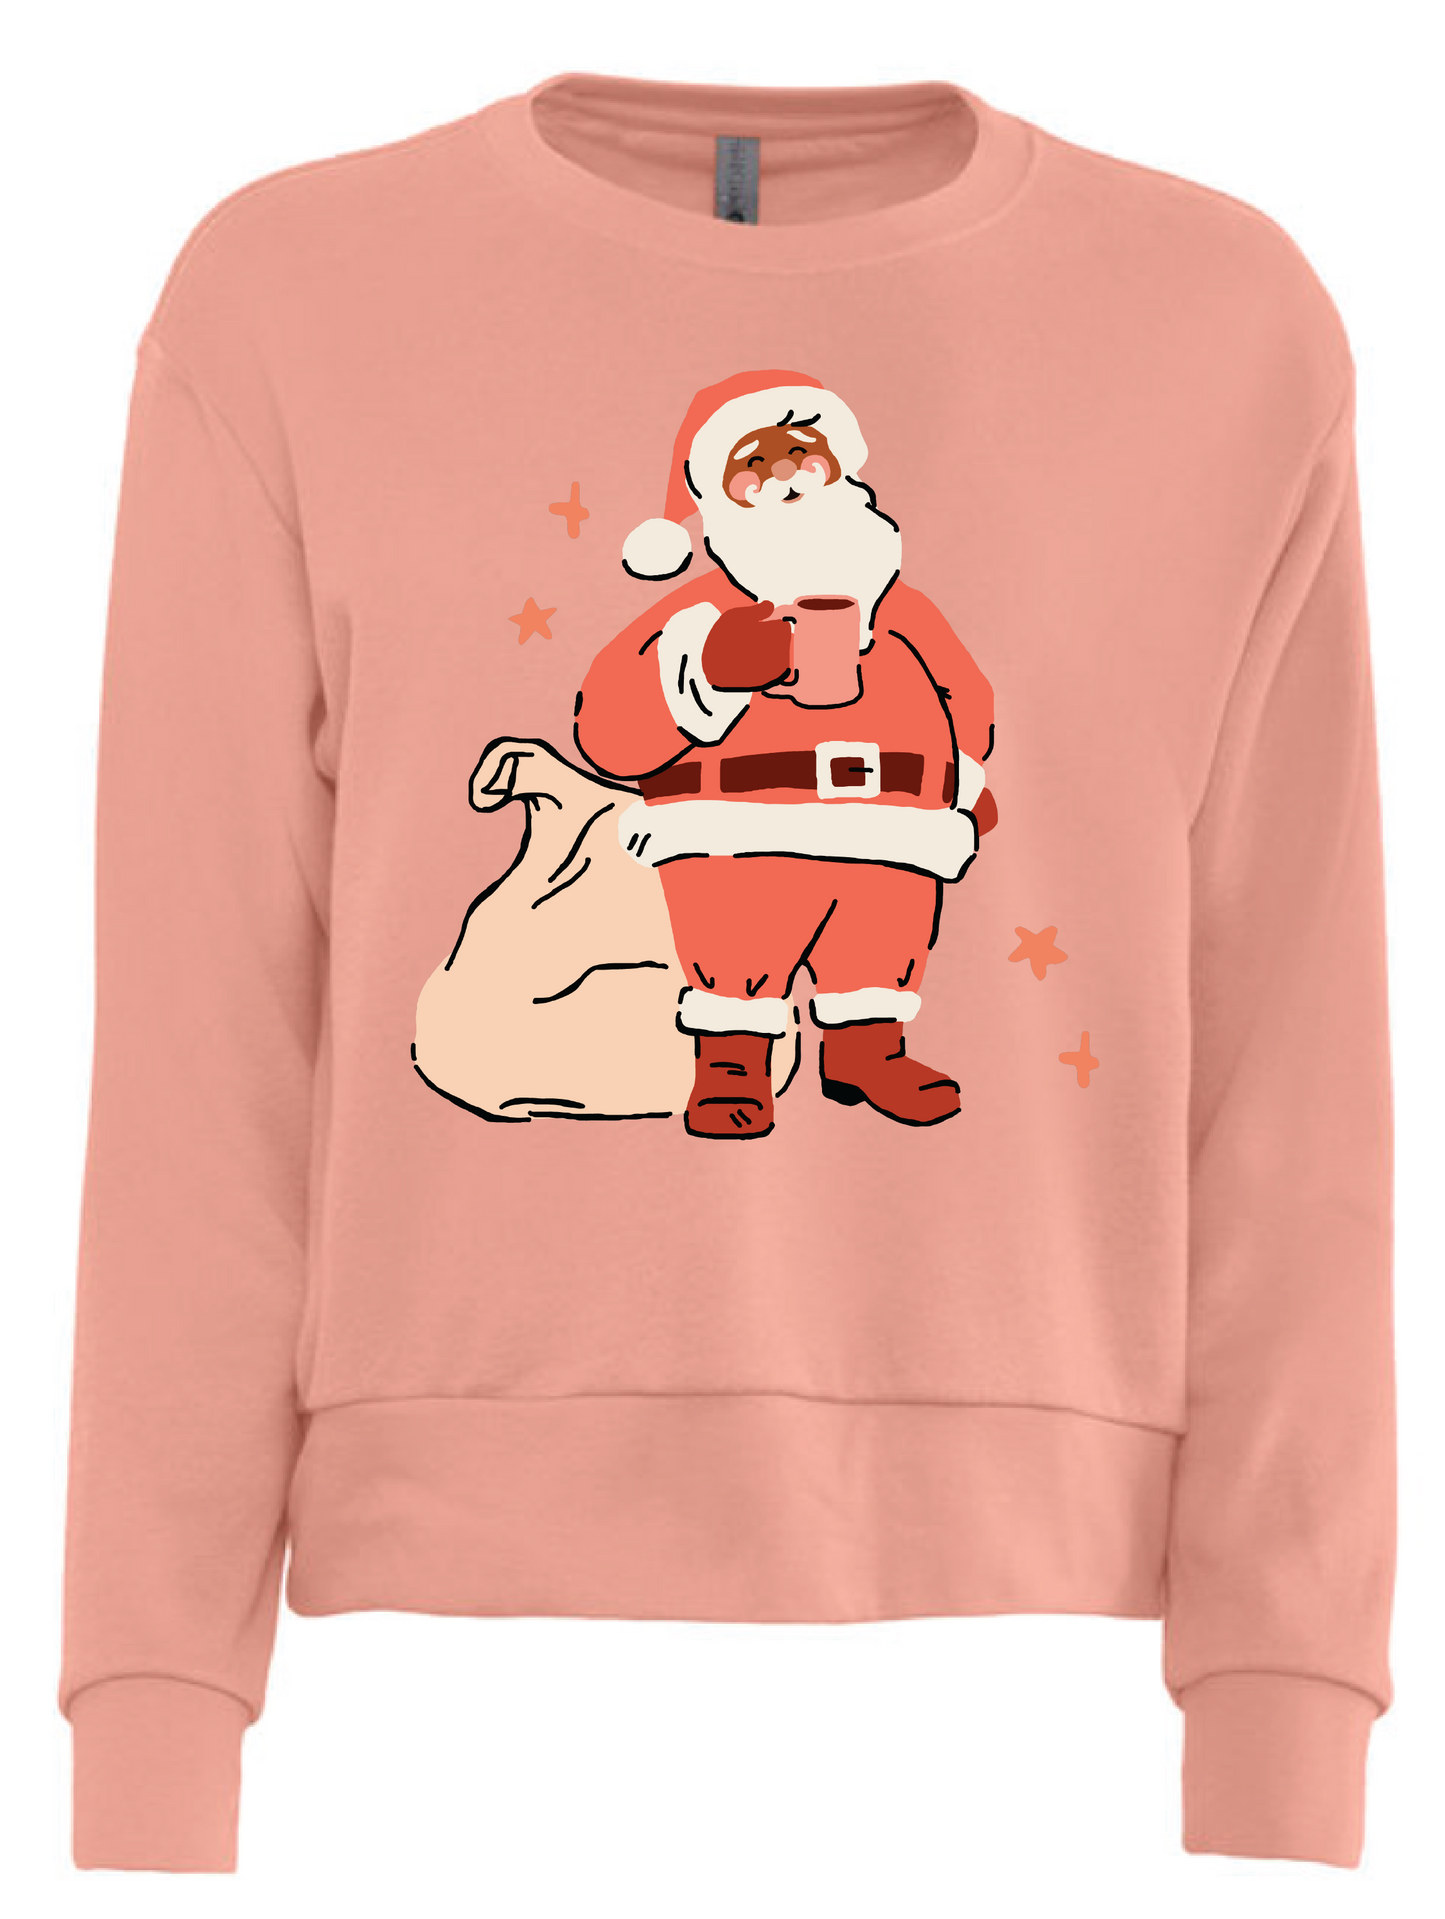 Santa WOMEN'S Sweatshirt - Pink / Dark Skin